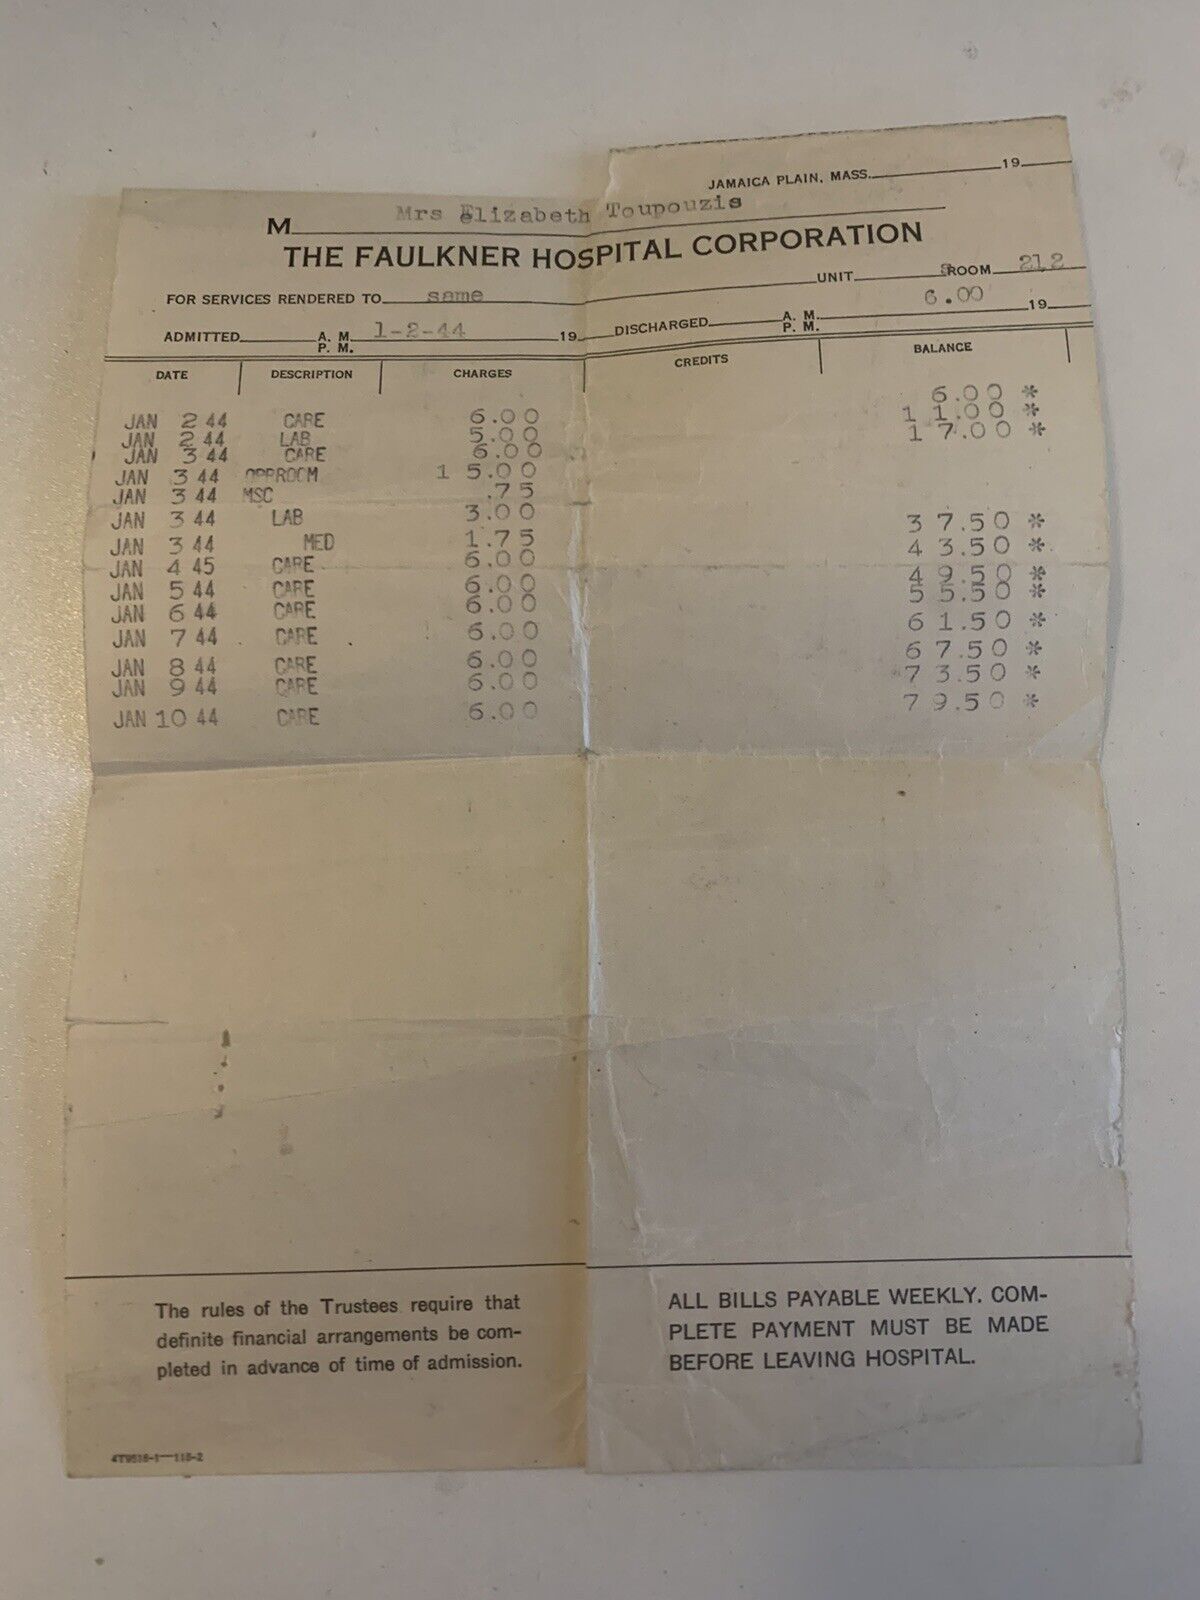 1944 Faulkner Hospital Corp. Vintage Bill Receipt ~ Jamaica Plain, Massachusetts